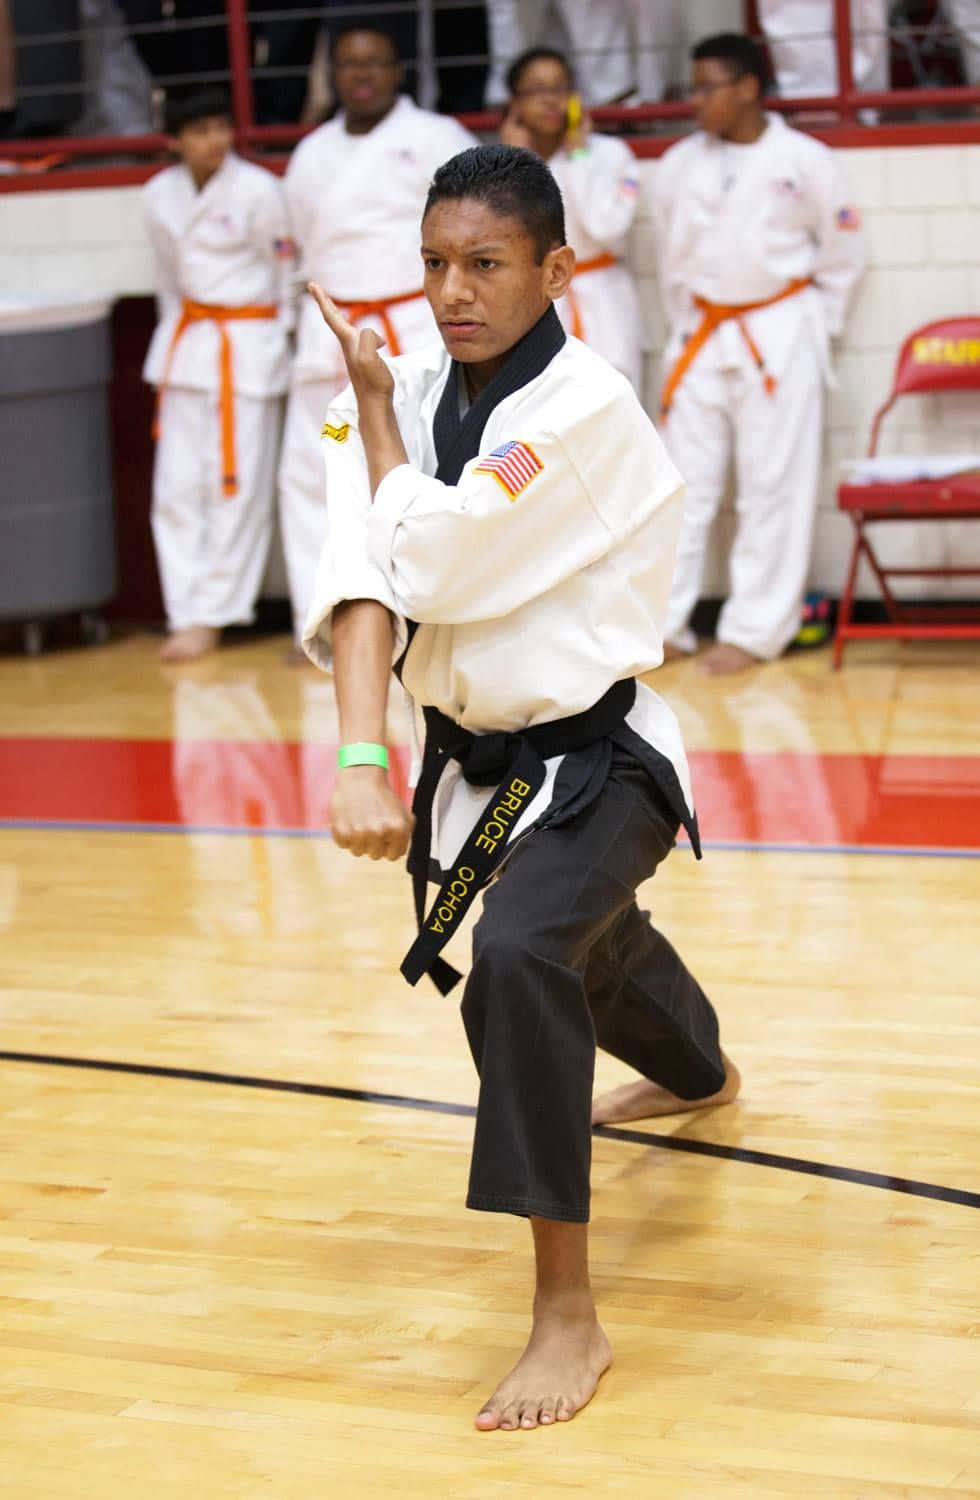 A martial artist wearing a pristine white uniform Wallpaper